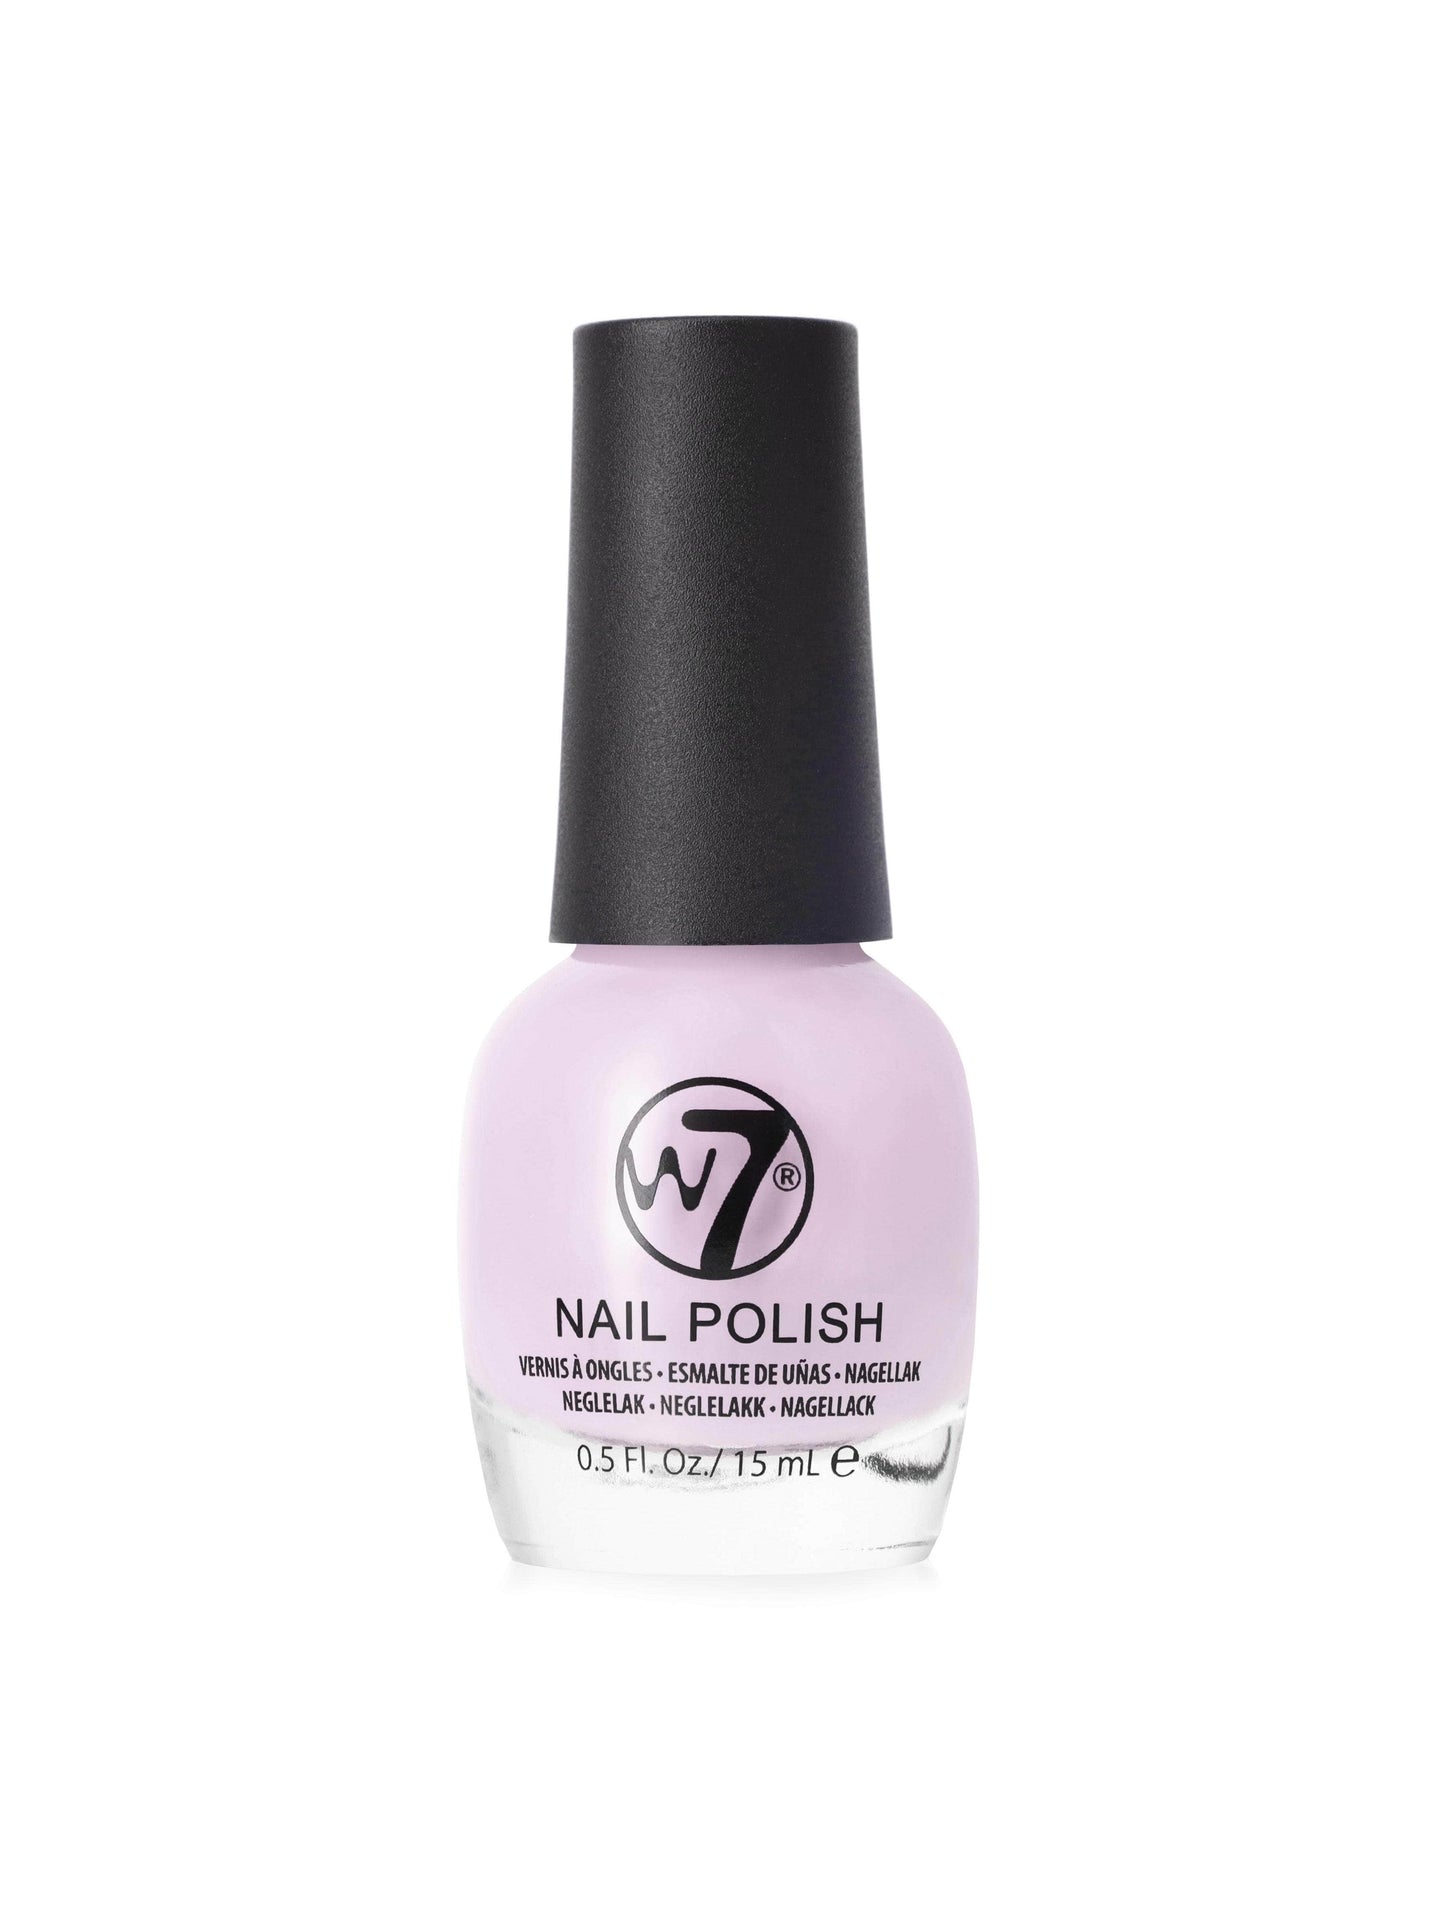 W7 Nail Polish 137A Sprung Lilac